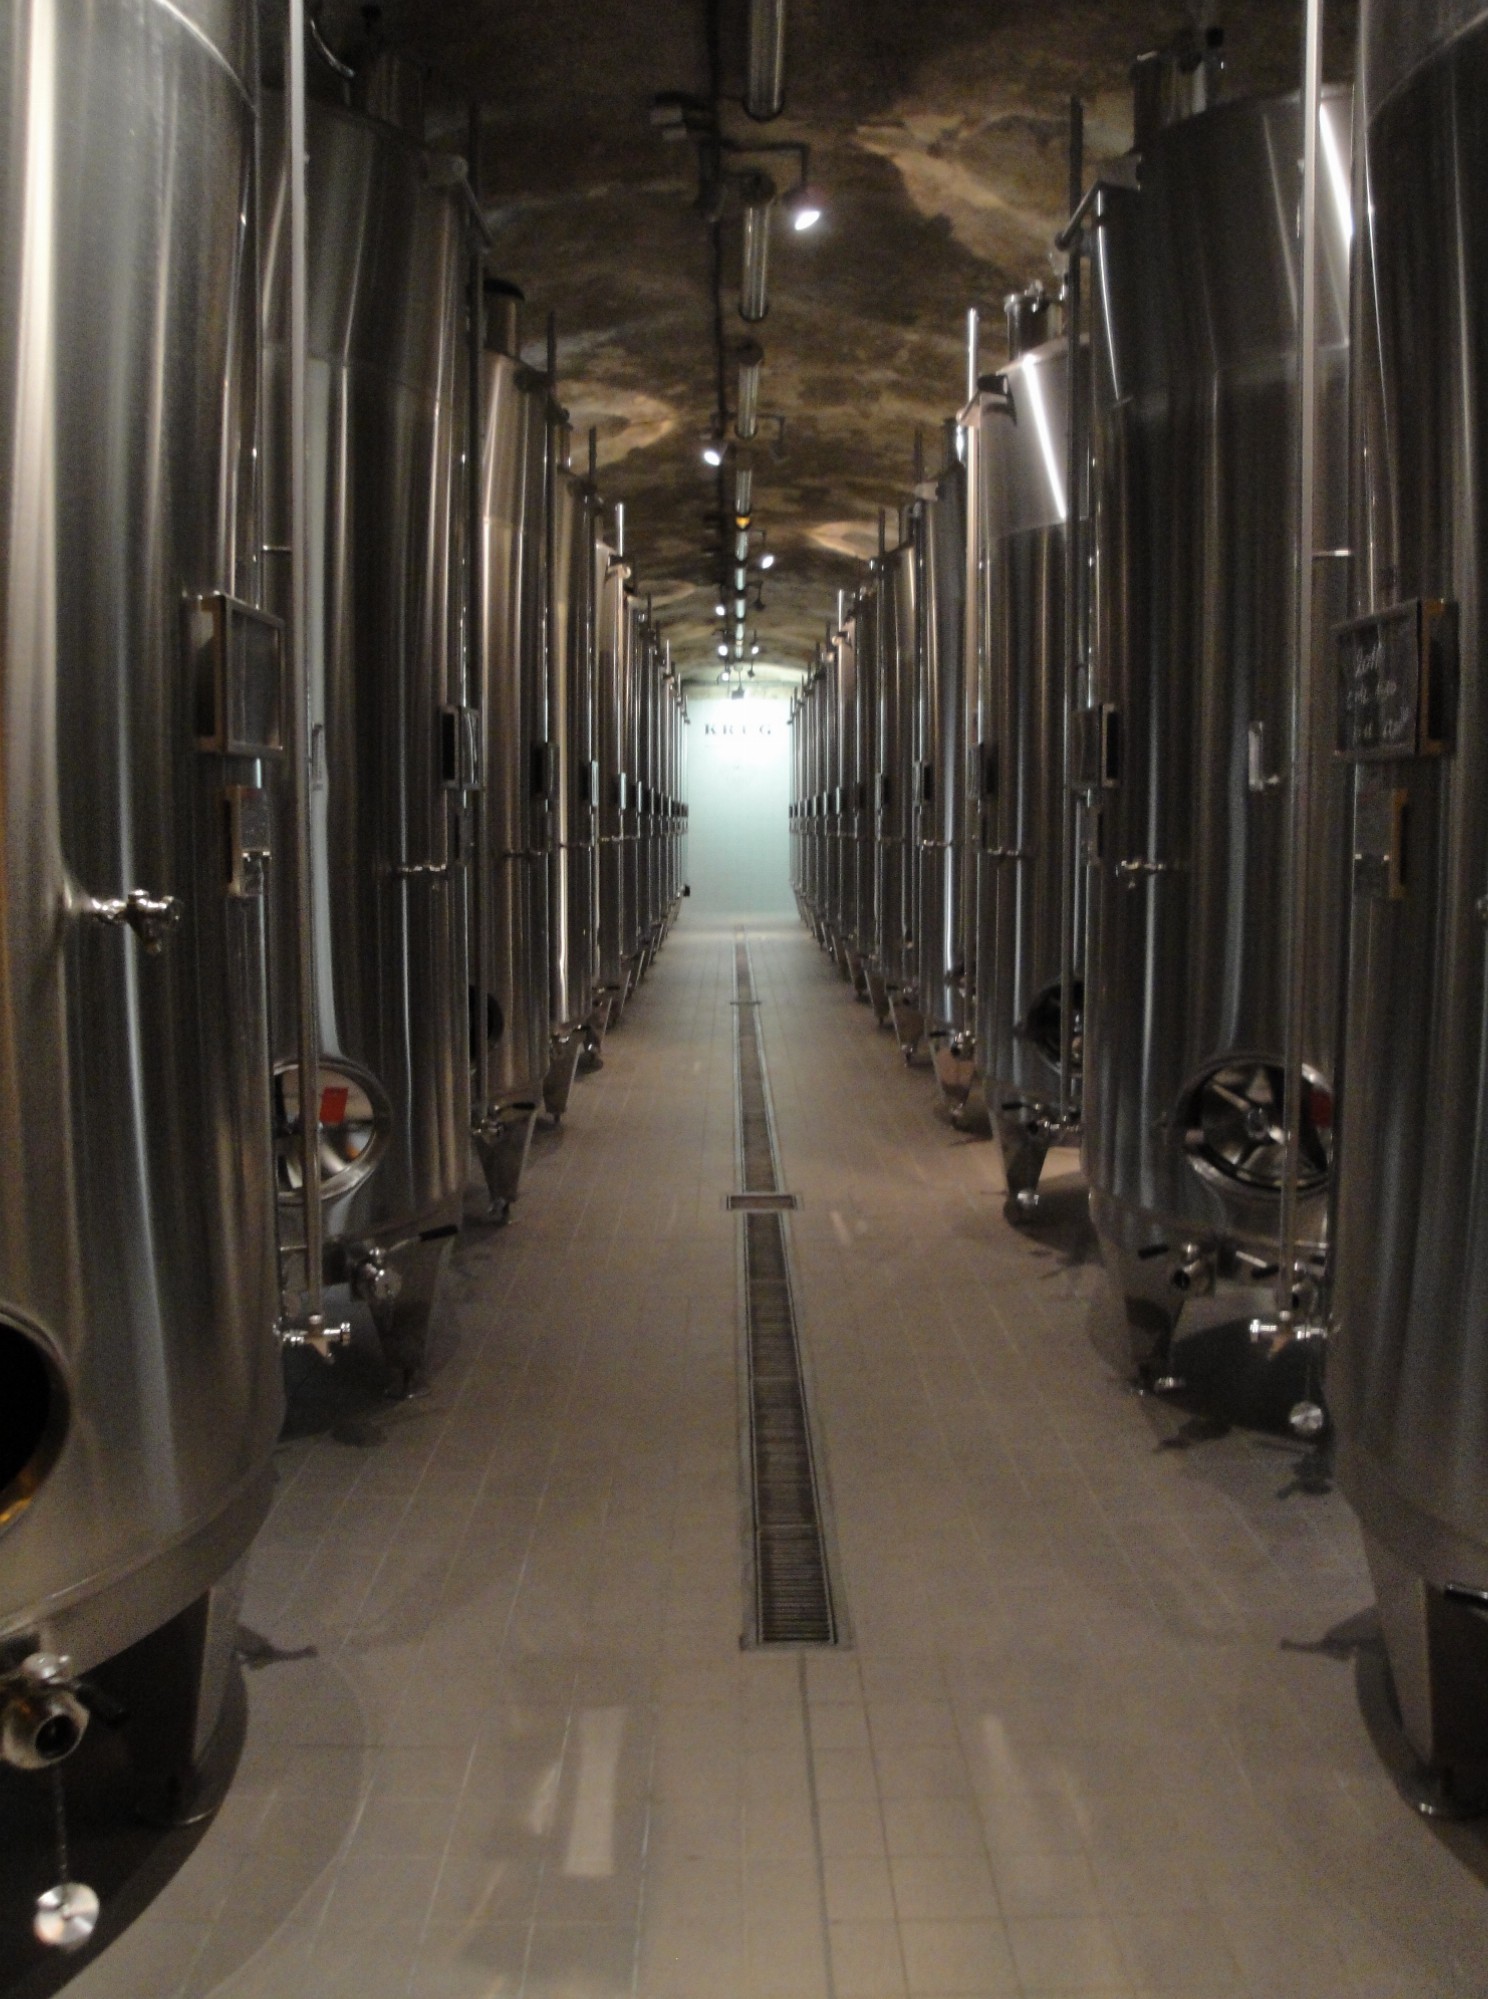 Krug Champagne 1976–2008: a vertical tasting of vintage and NV wines